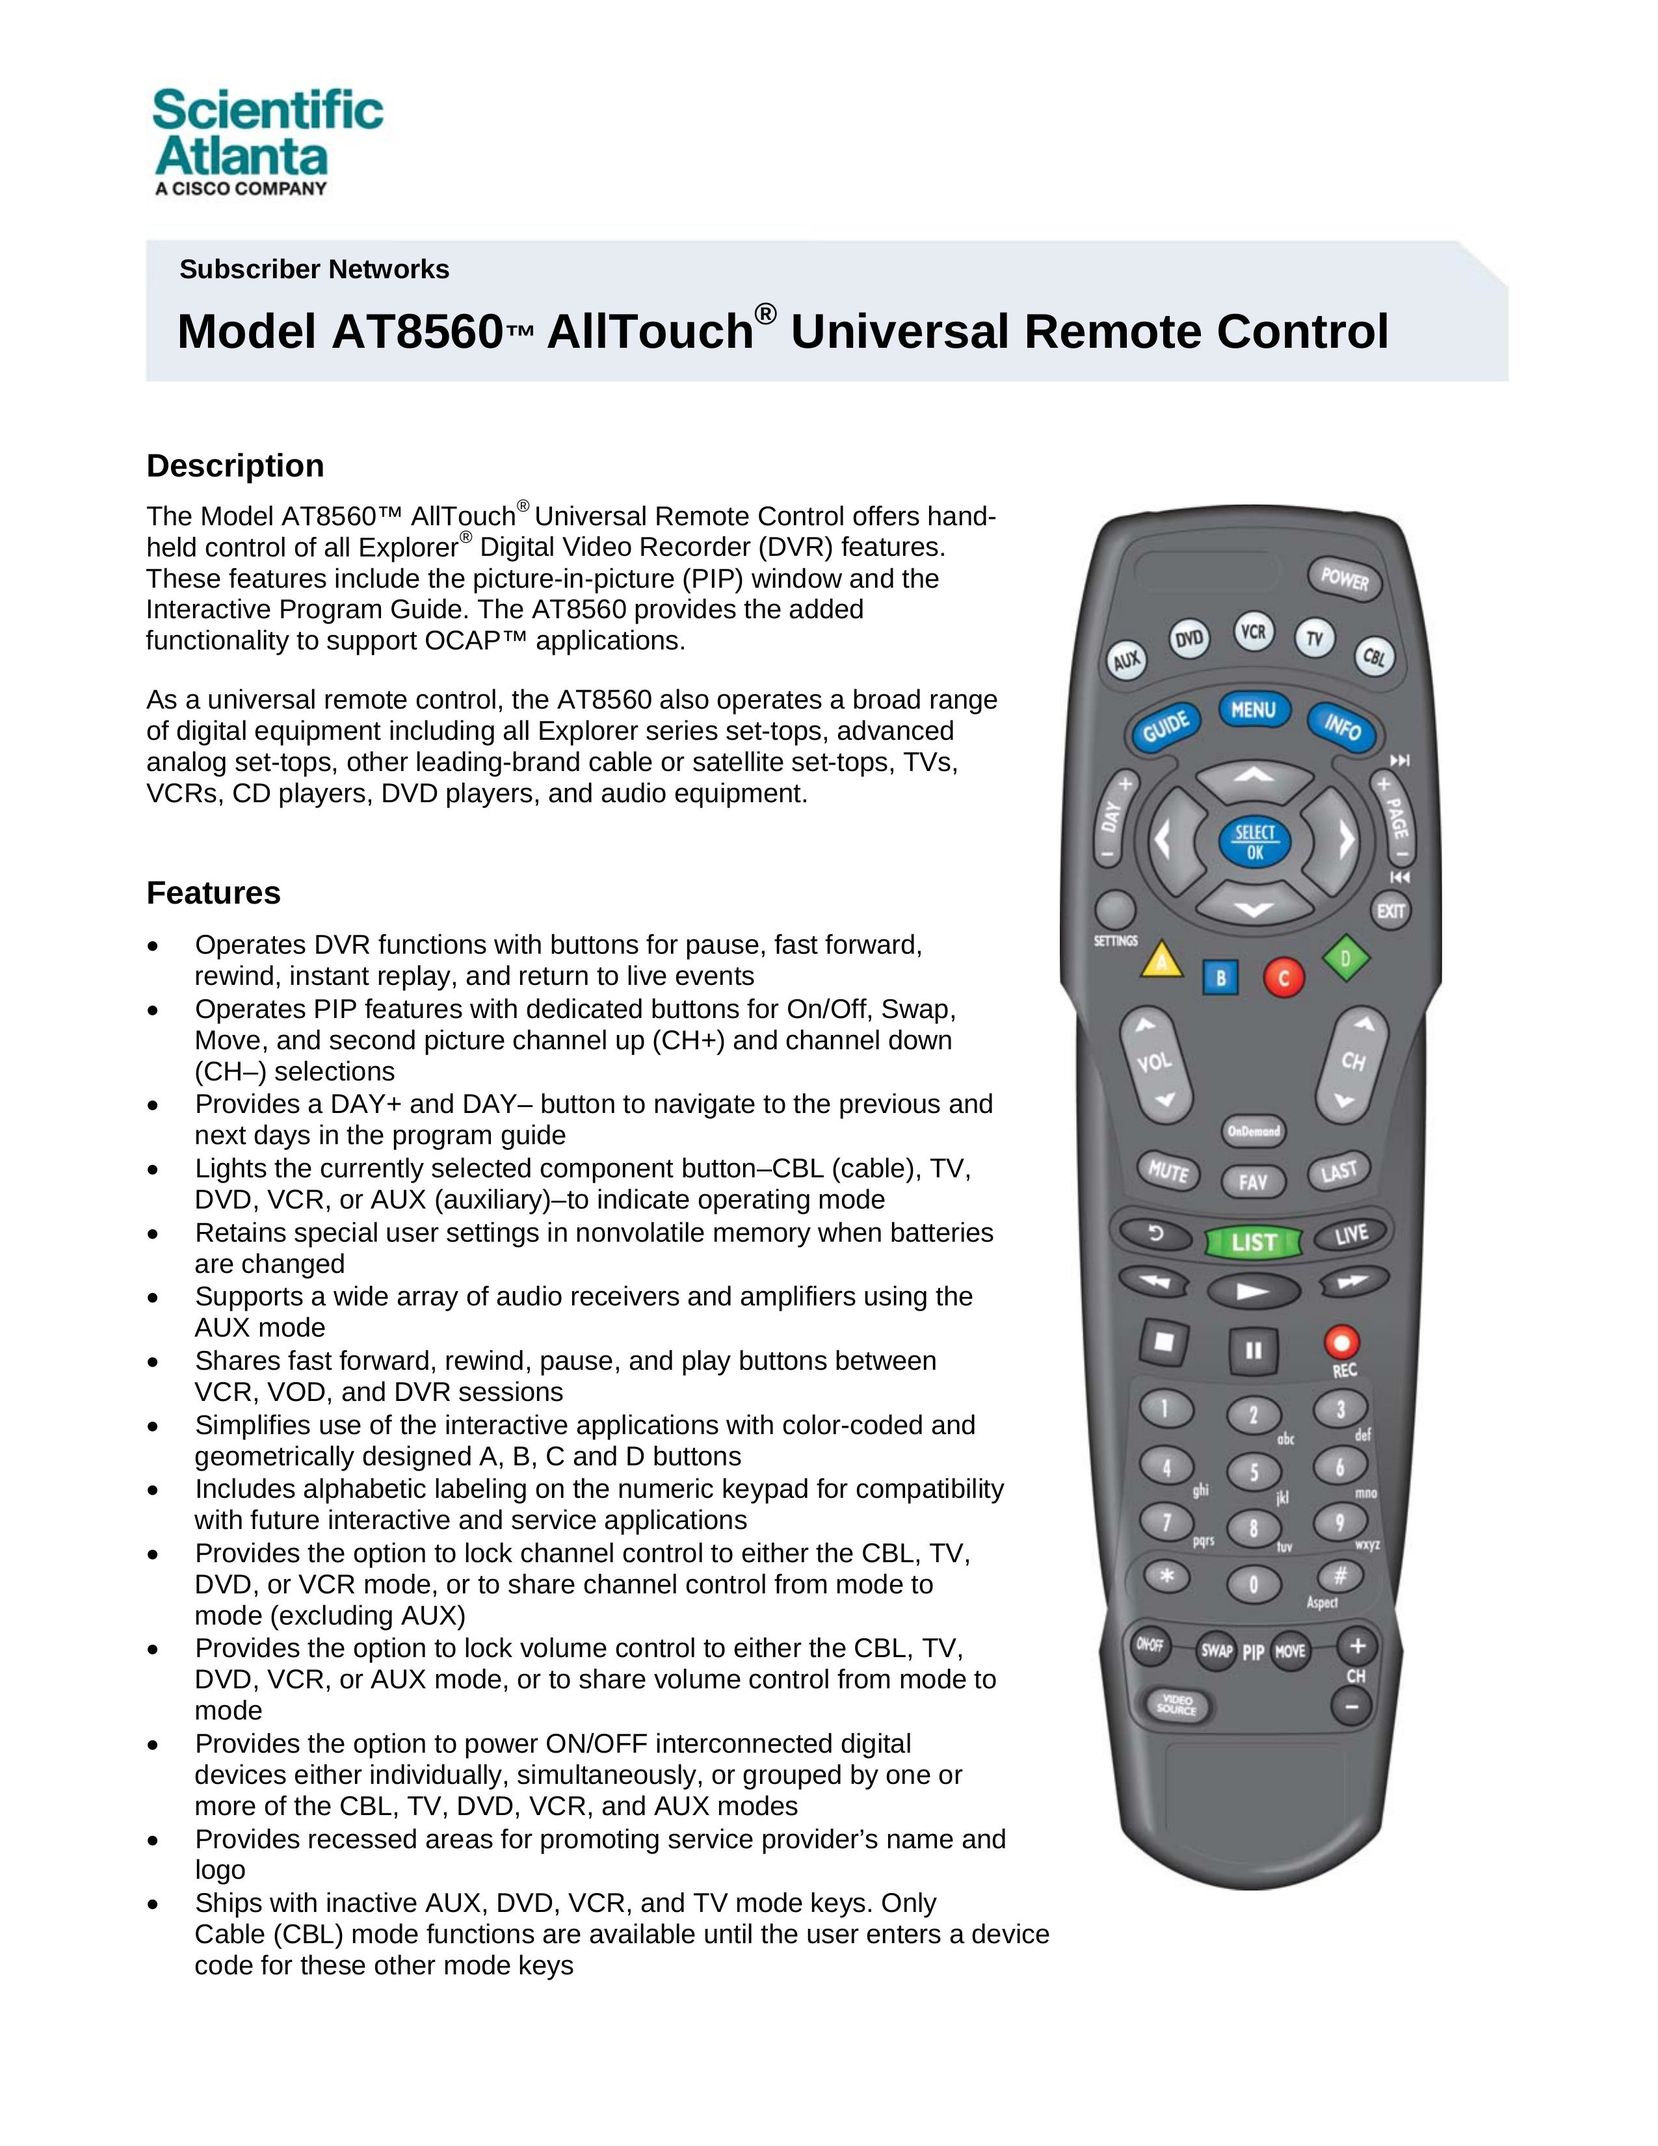 Scientific Atlanta AT8560TM Universal Remote User Manual